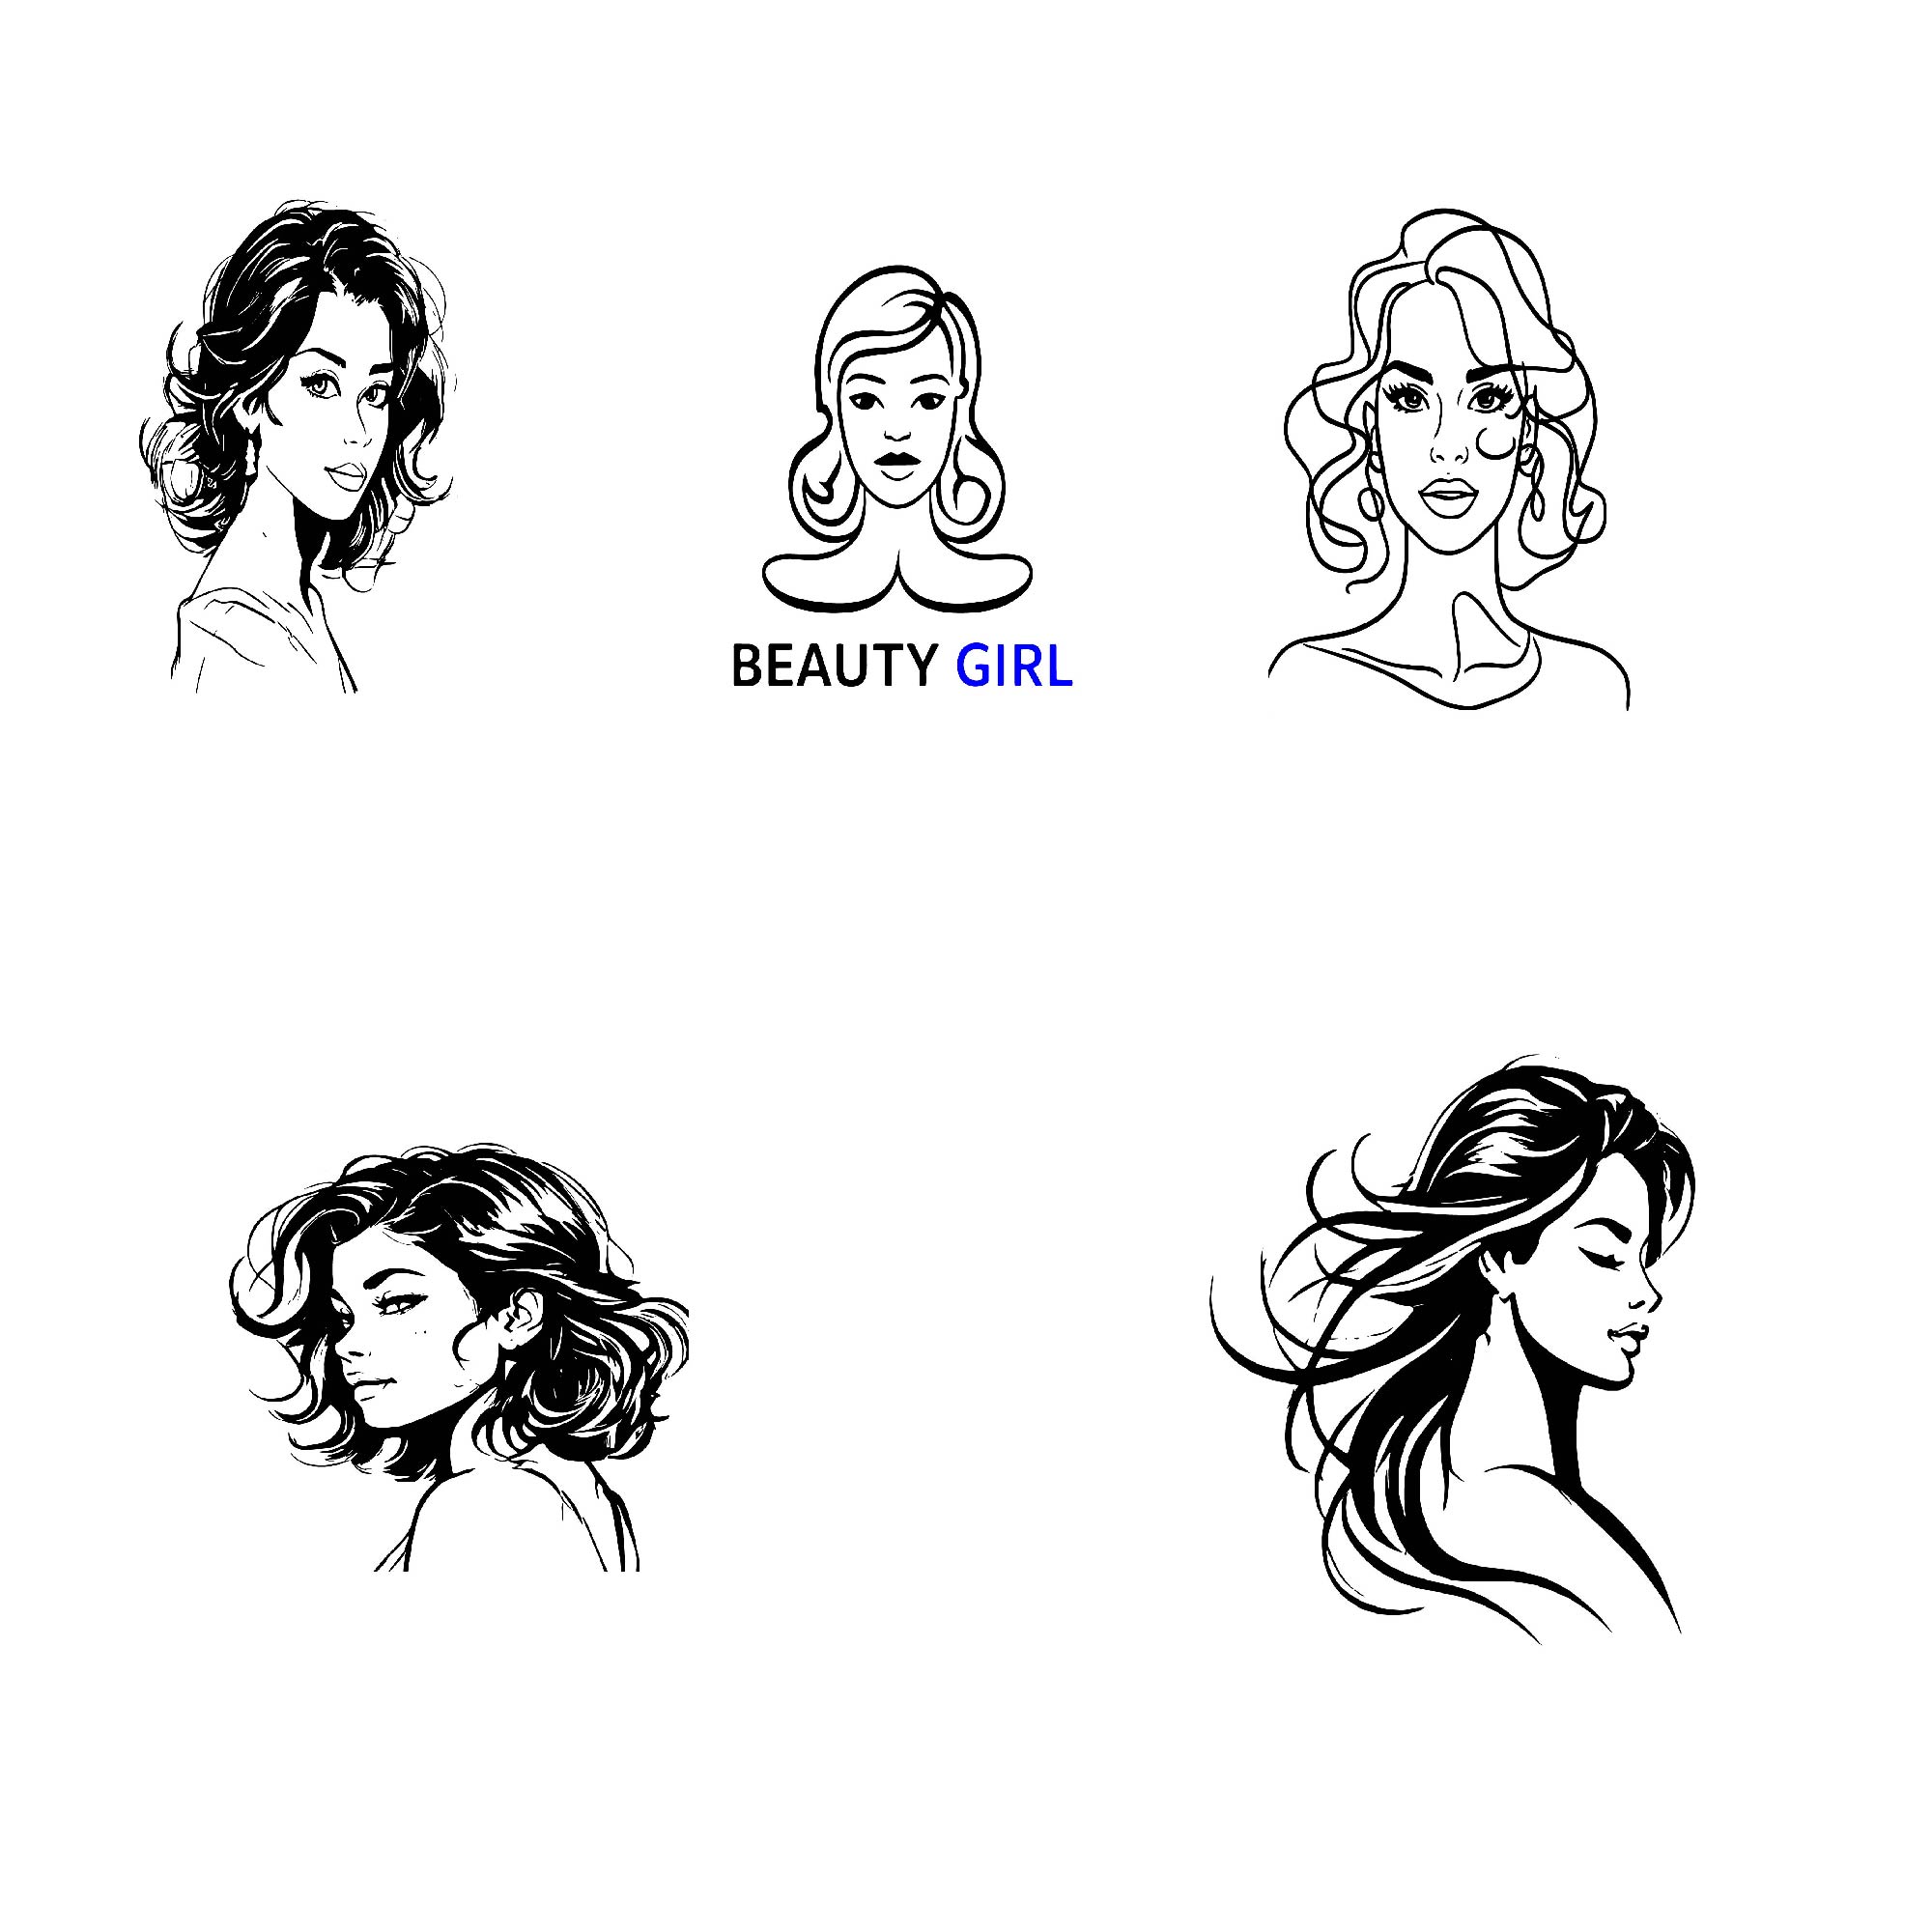 Top 5 Beauty Girls Logo Design cover image.